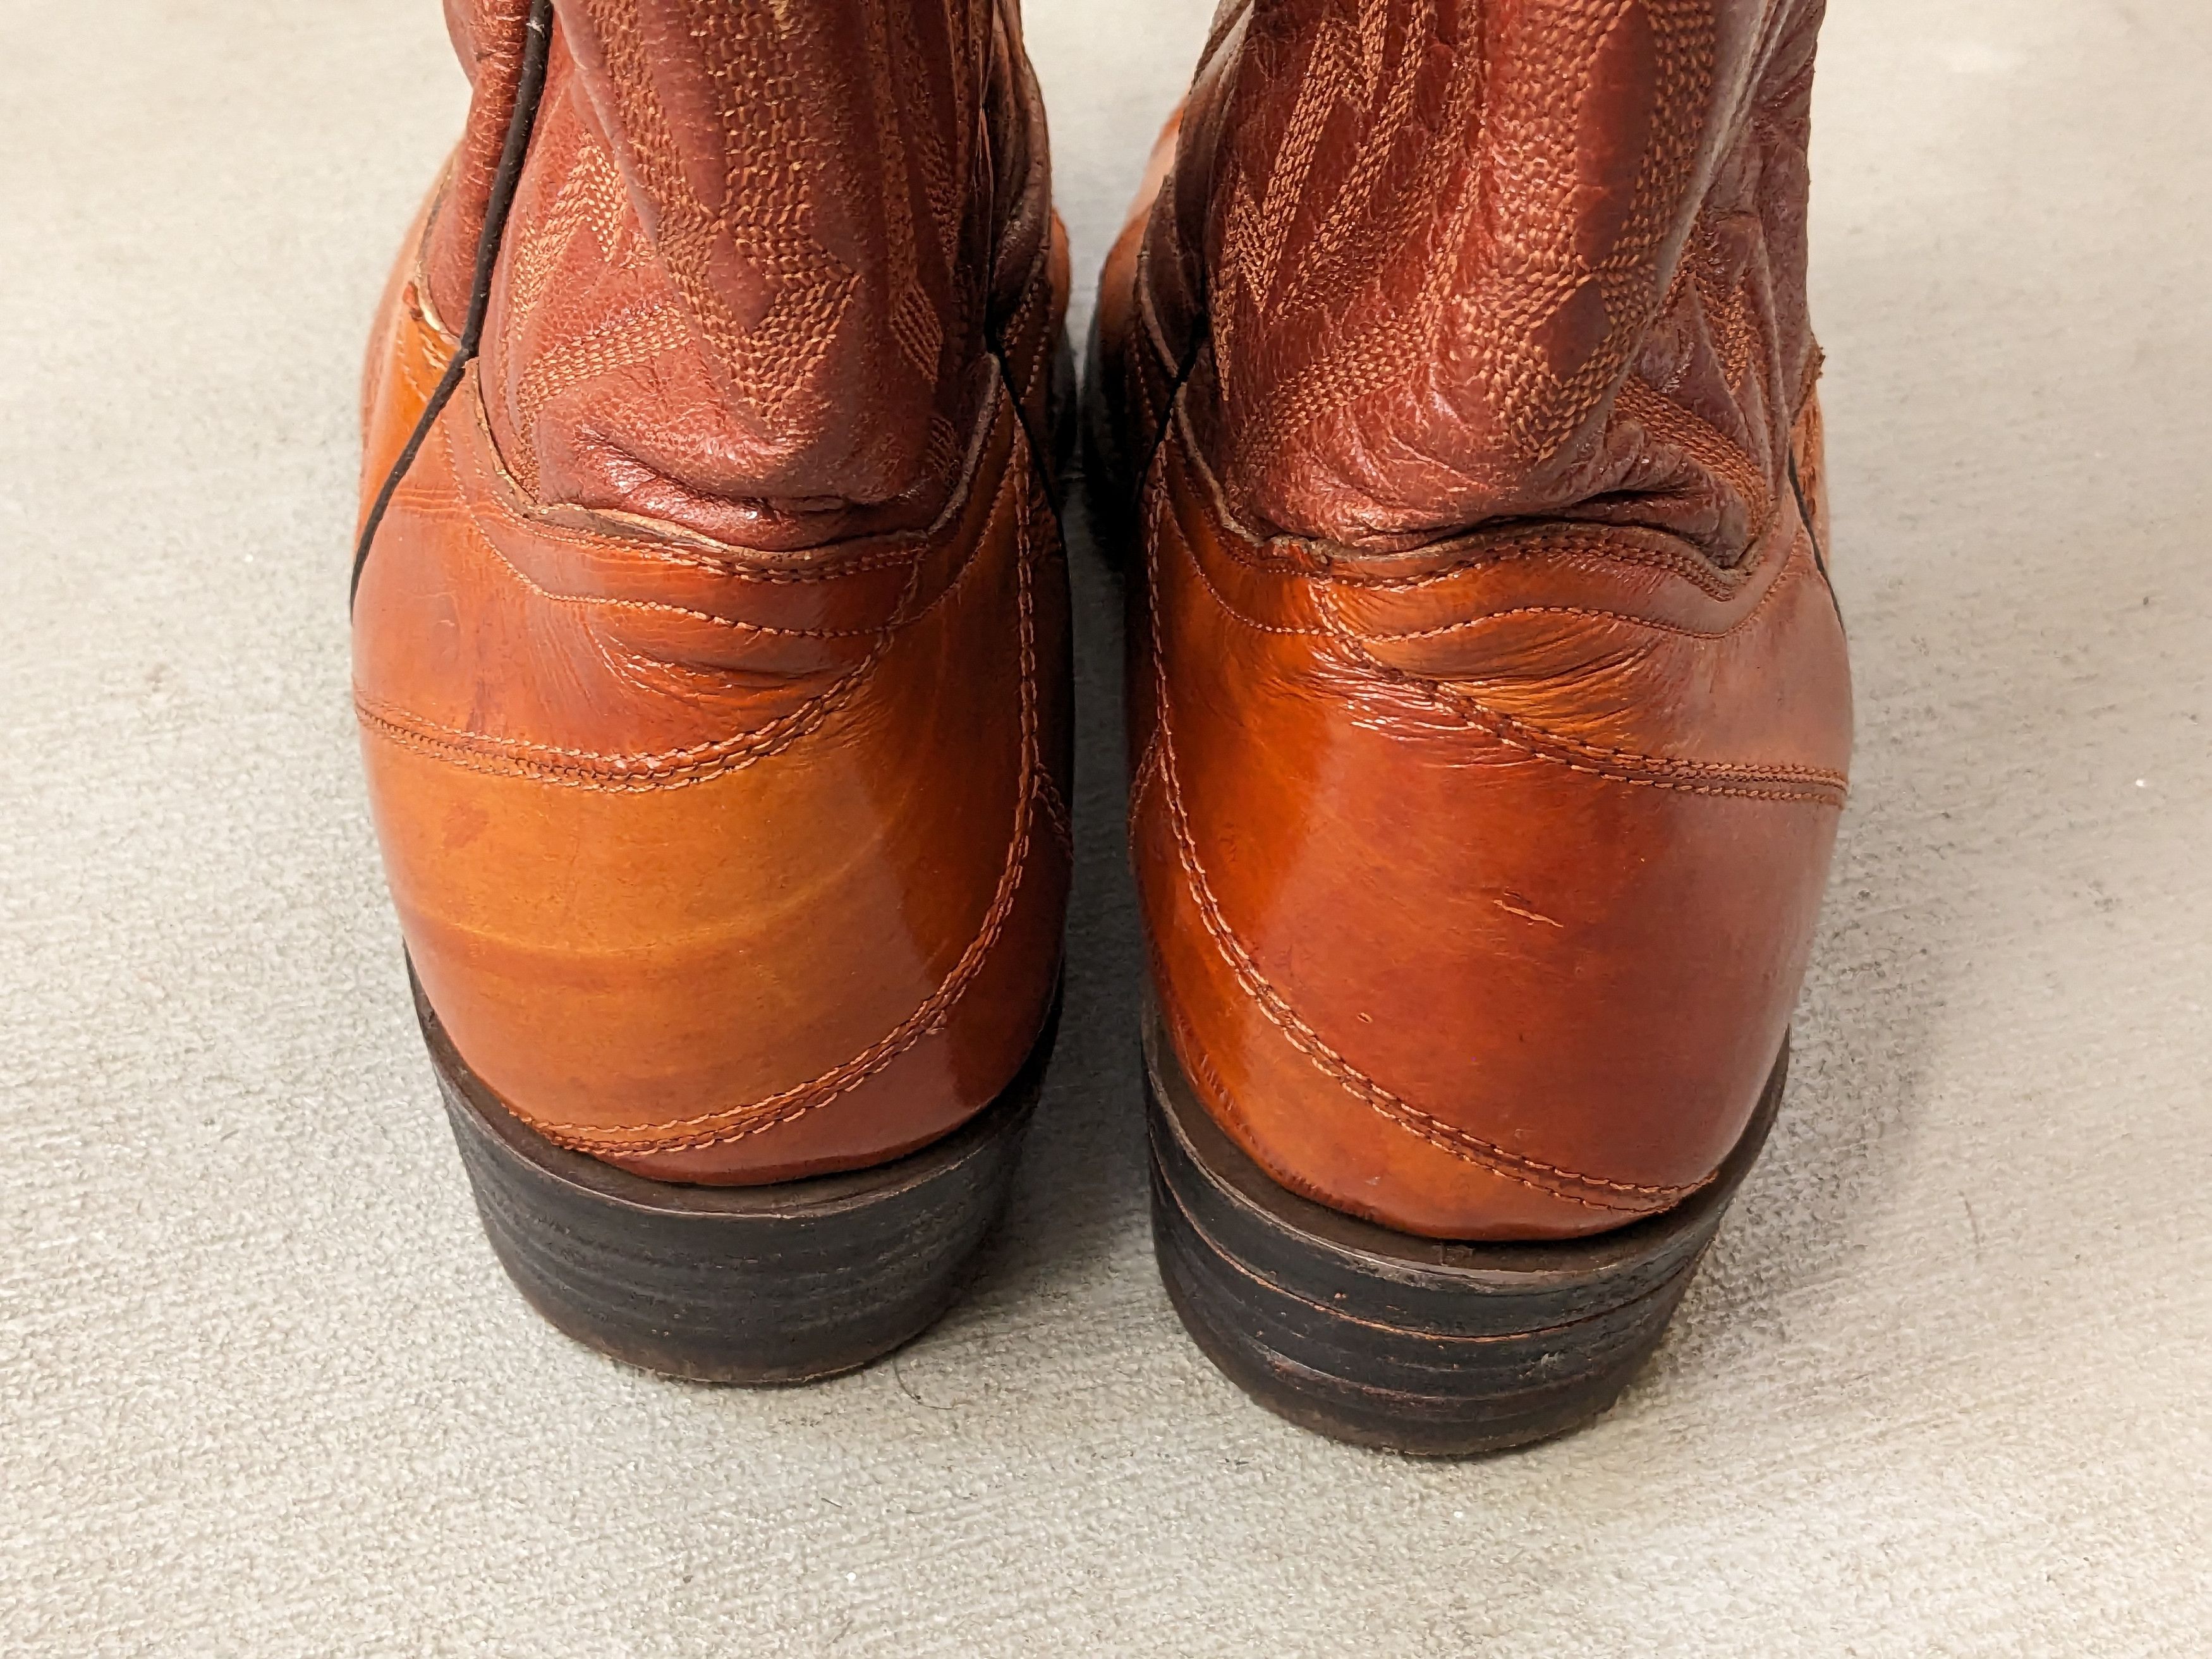 Vintage Cowboy Boots Brown Size 10 Eel Leather Botas Mexico Size US 10 / EU 43 - 14 Thumbnail